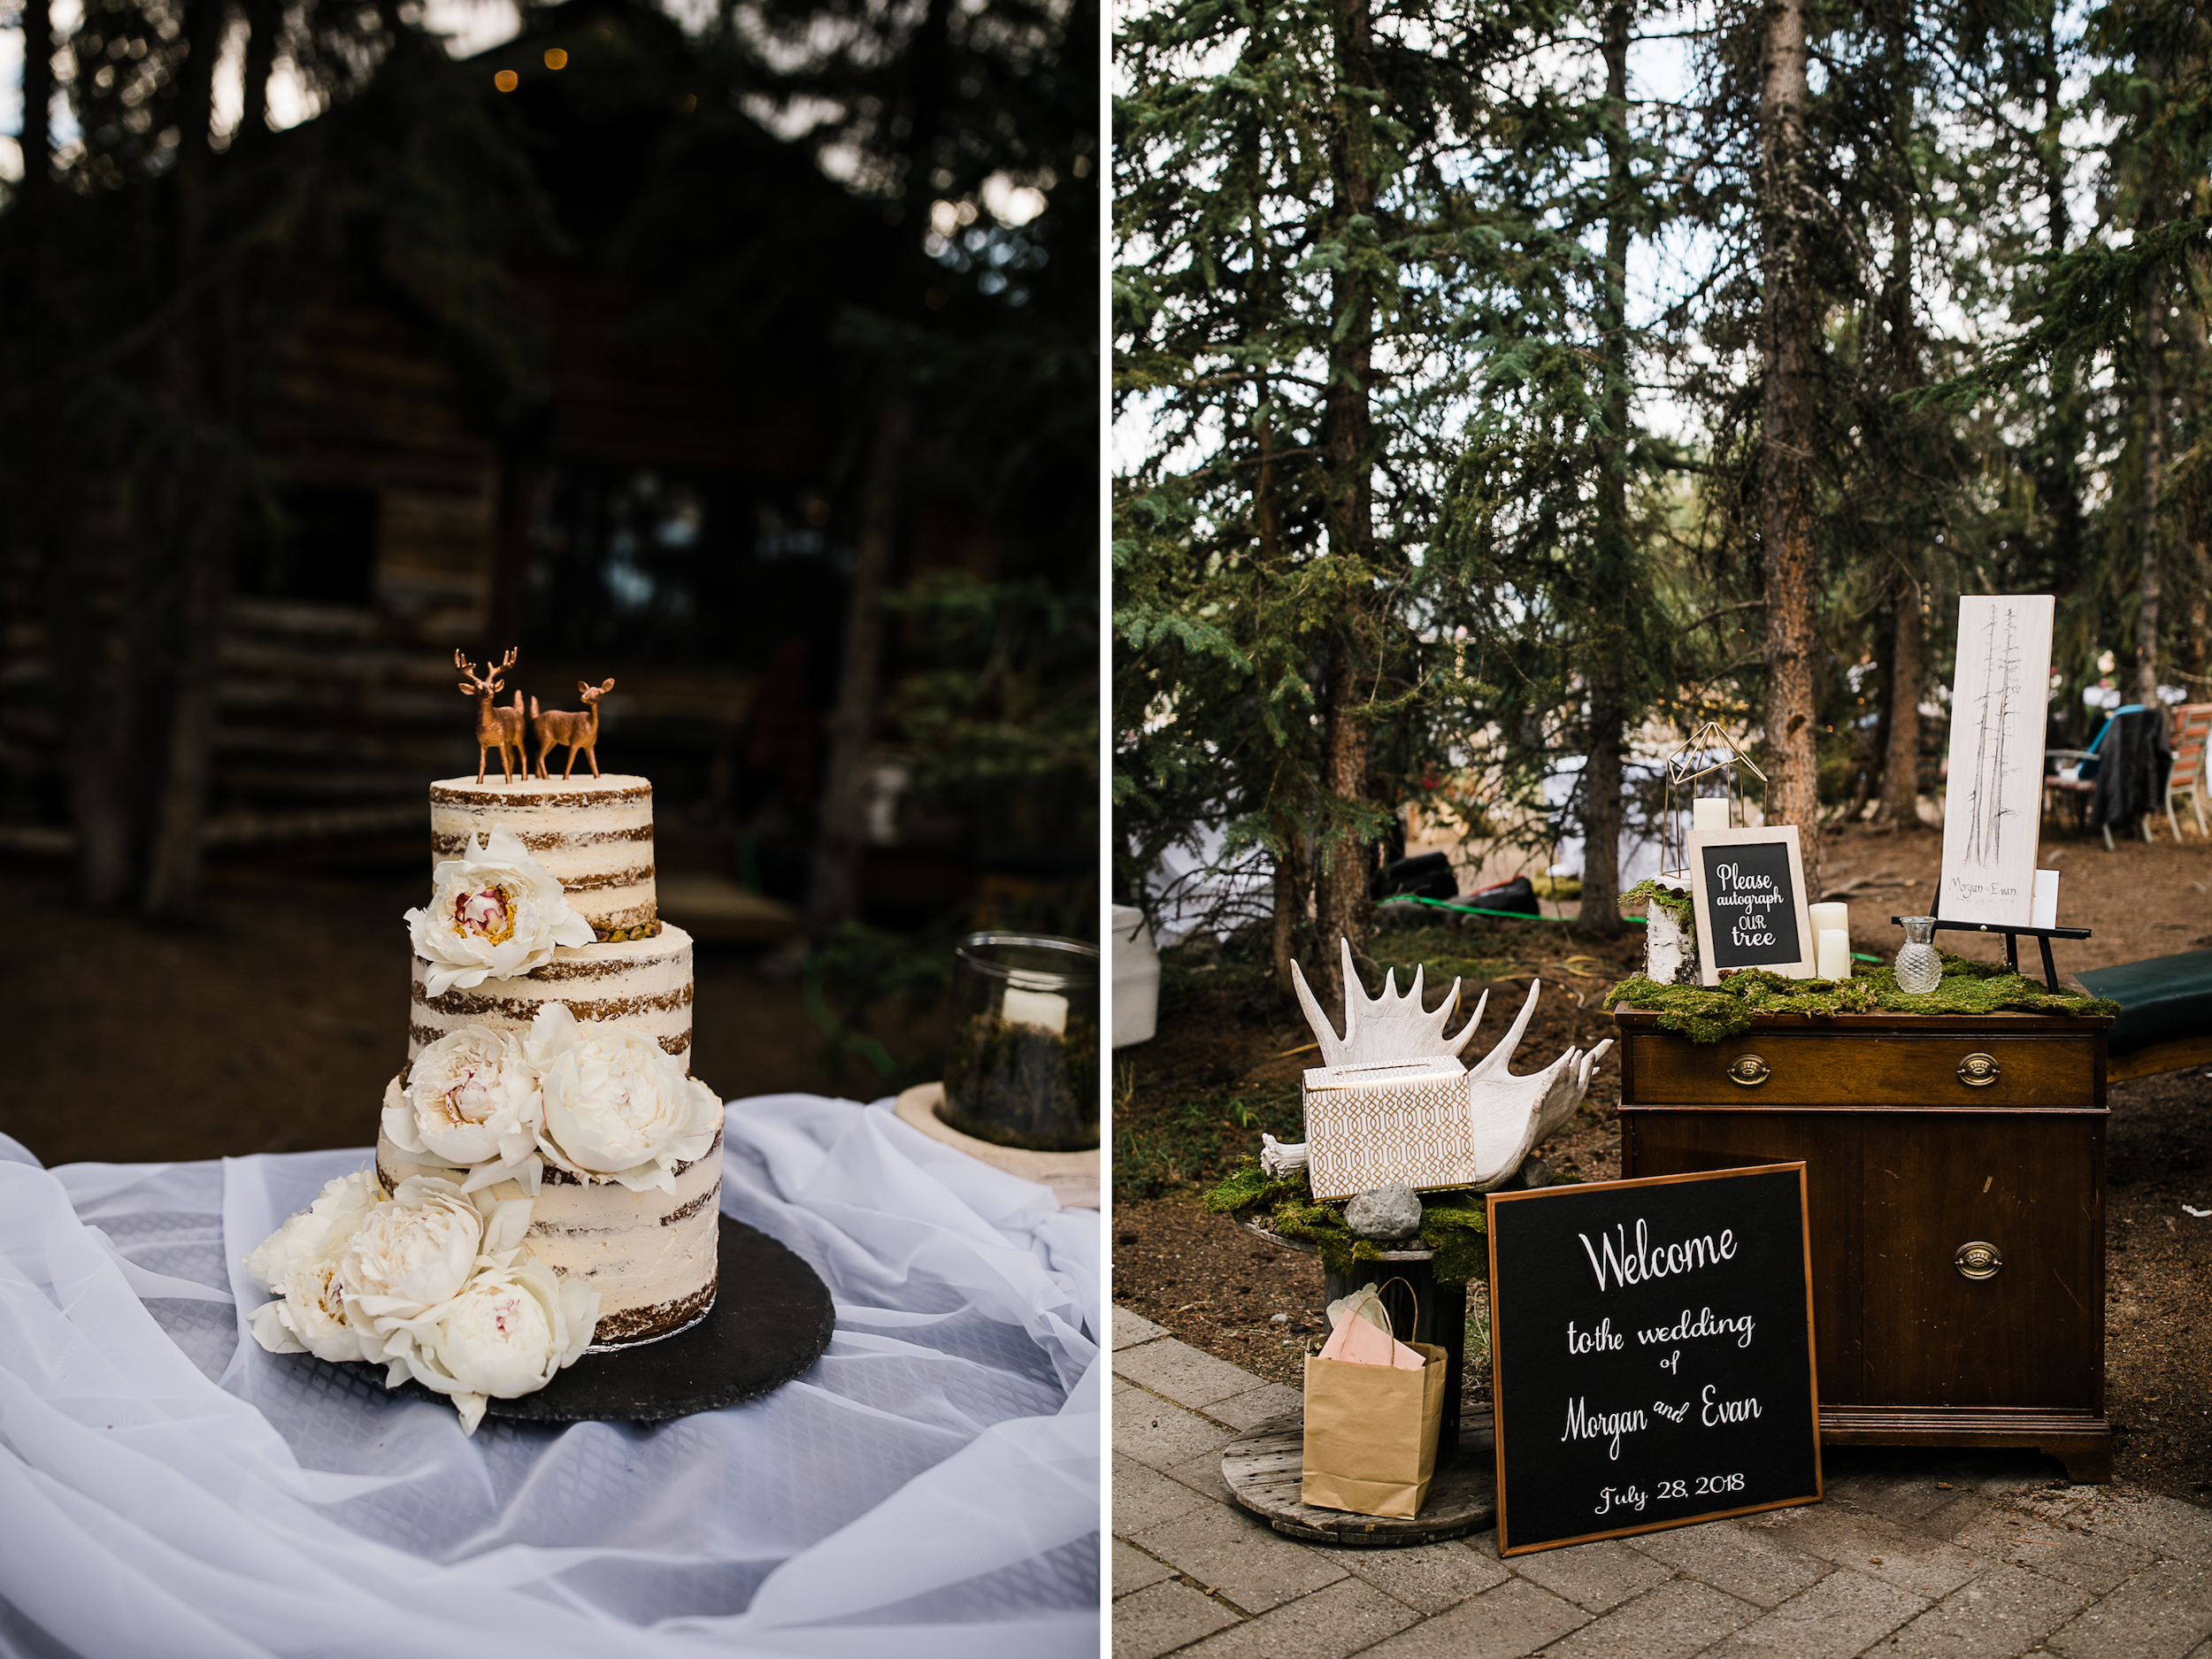 morgan + evan's intimate wedding on the denali airstrip | alaska destination wedding near Denali National Park and Preserve | the hearnes adventure photography 